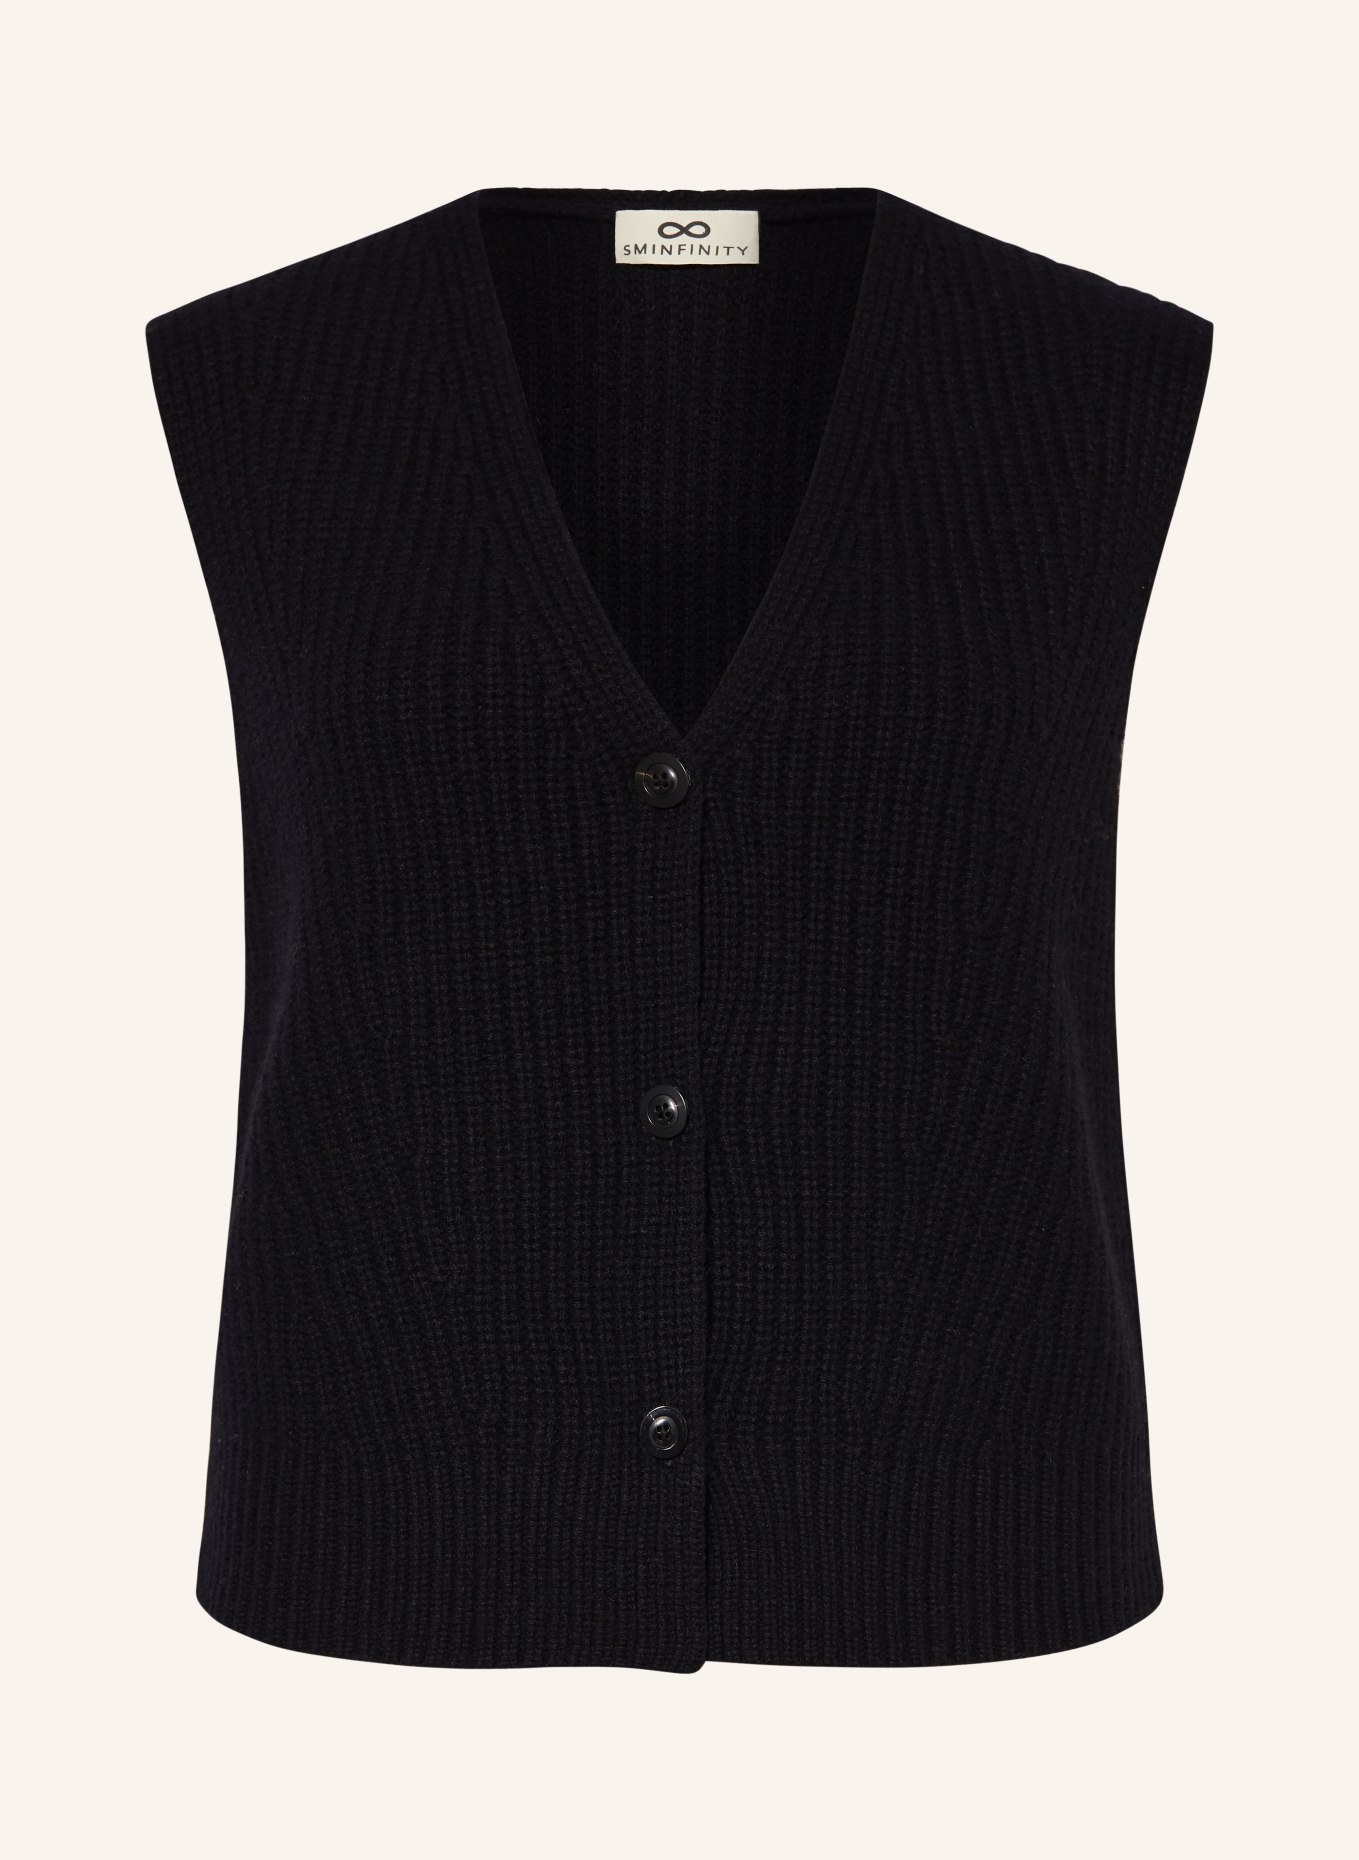 SMINFINITY Knit vest in cashmere, Color: BLACK (Image 1)